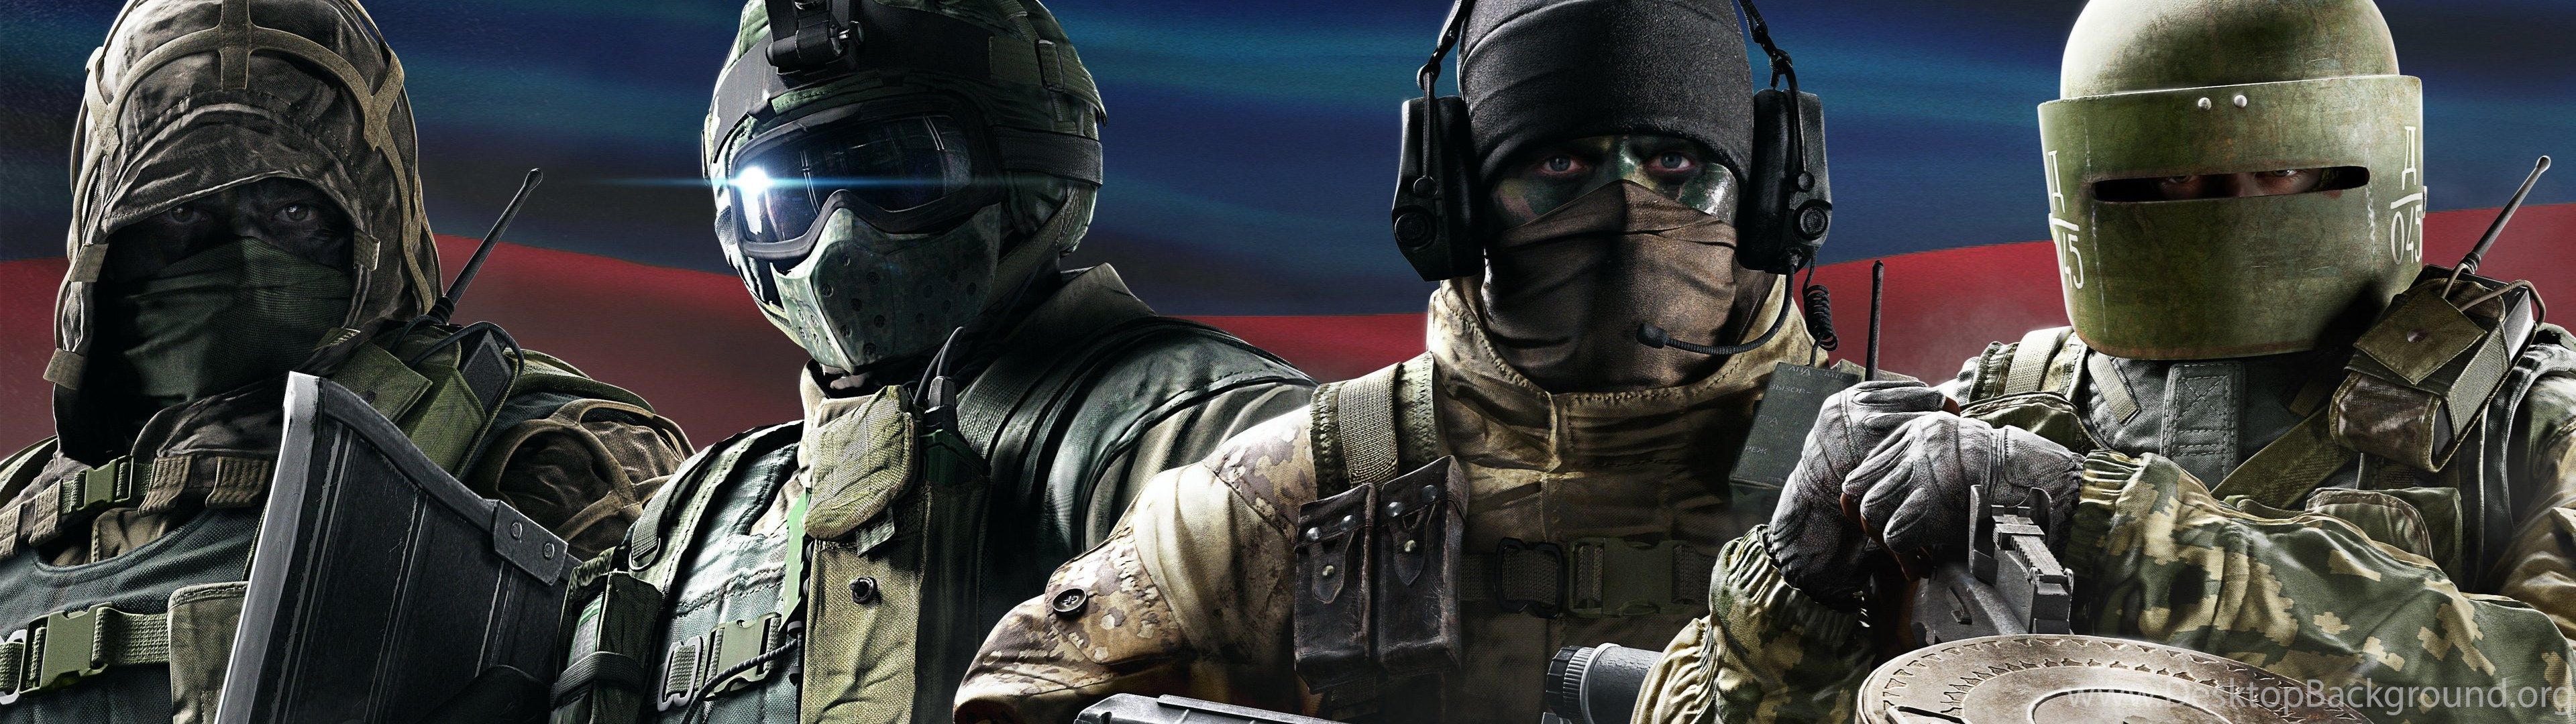 Tom Clancy's Rainbow Six Siege Spetsnaz Wallpaper Desktop Background